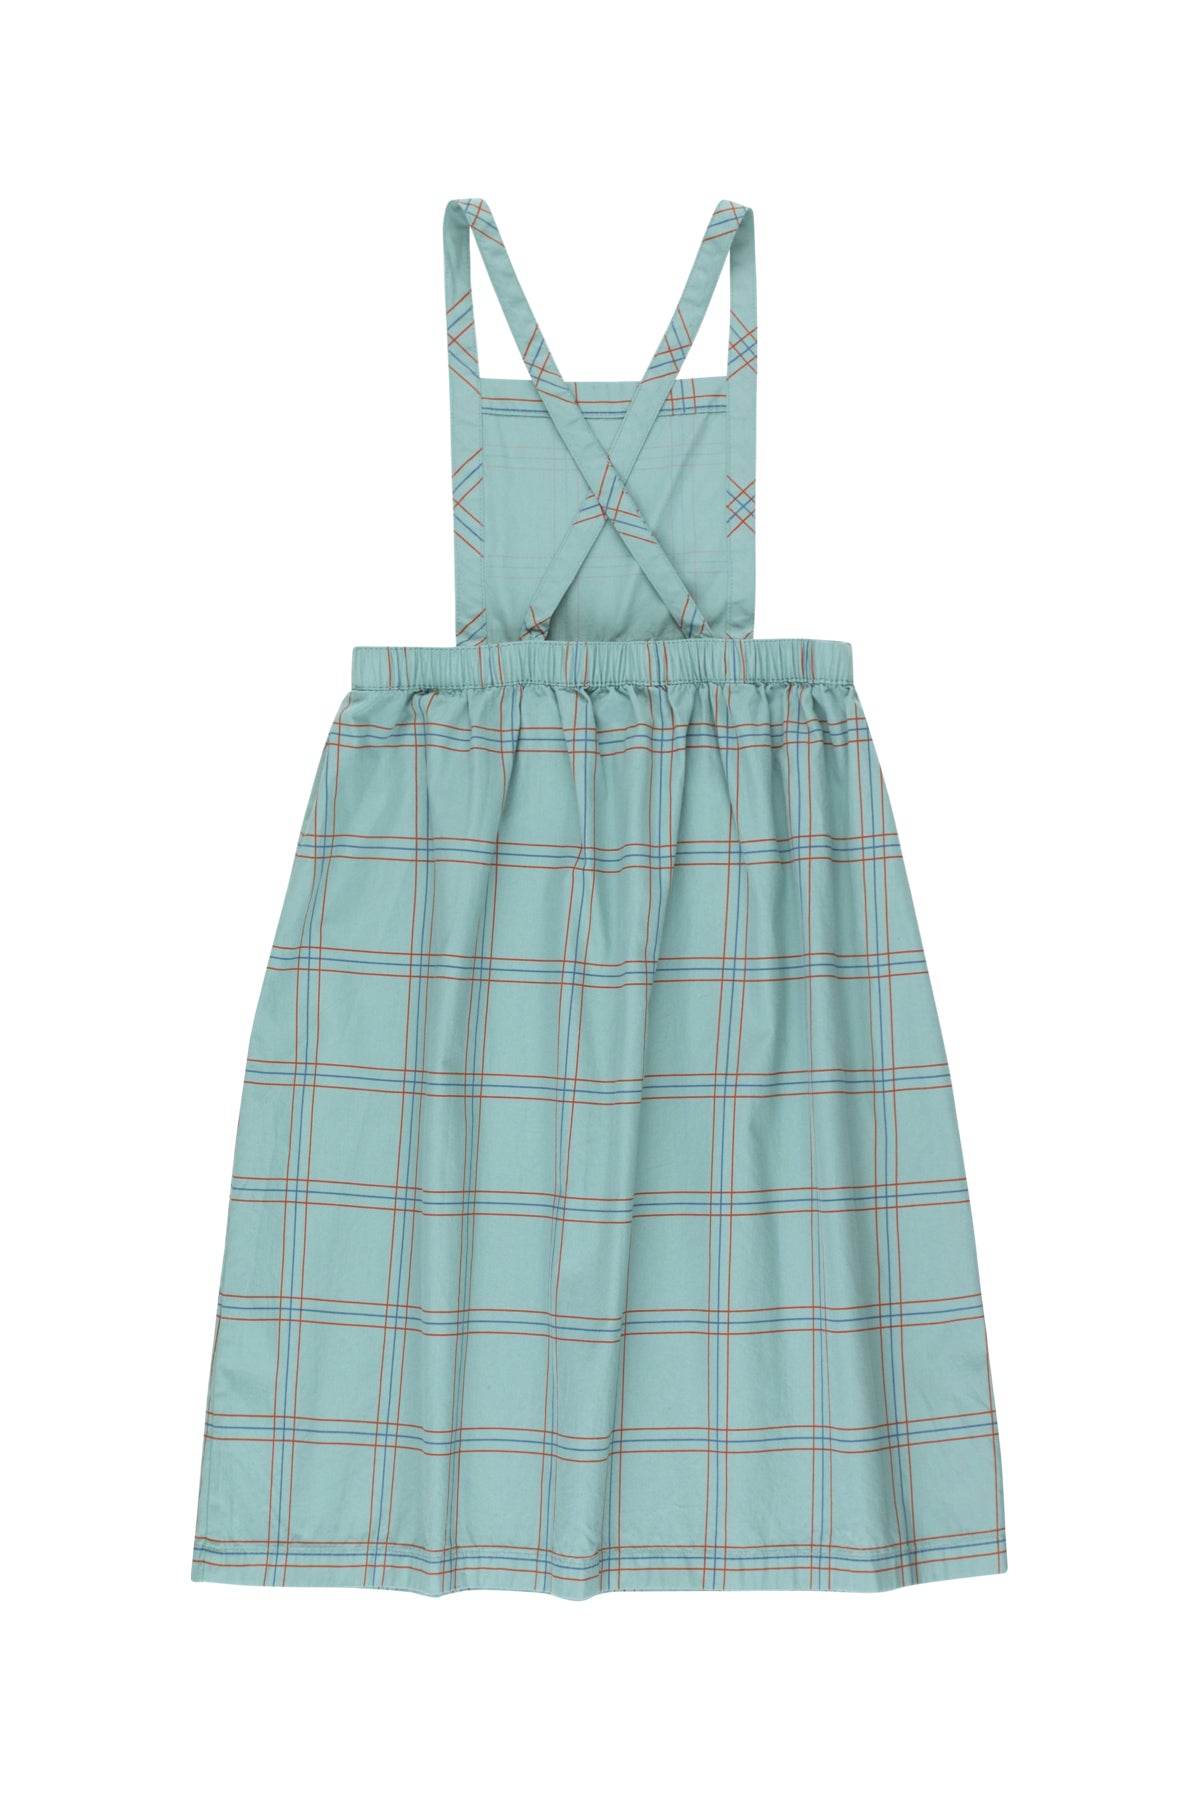 Girls Sea Green Check Cotton Skirt